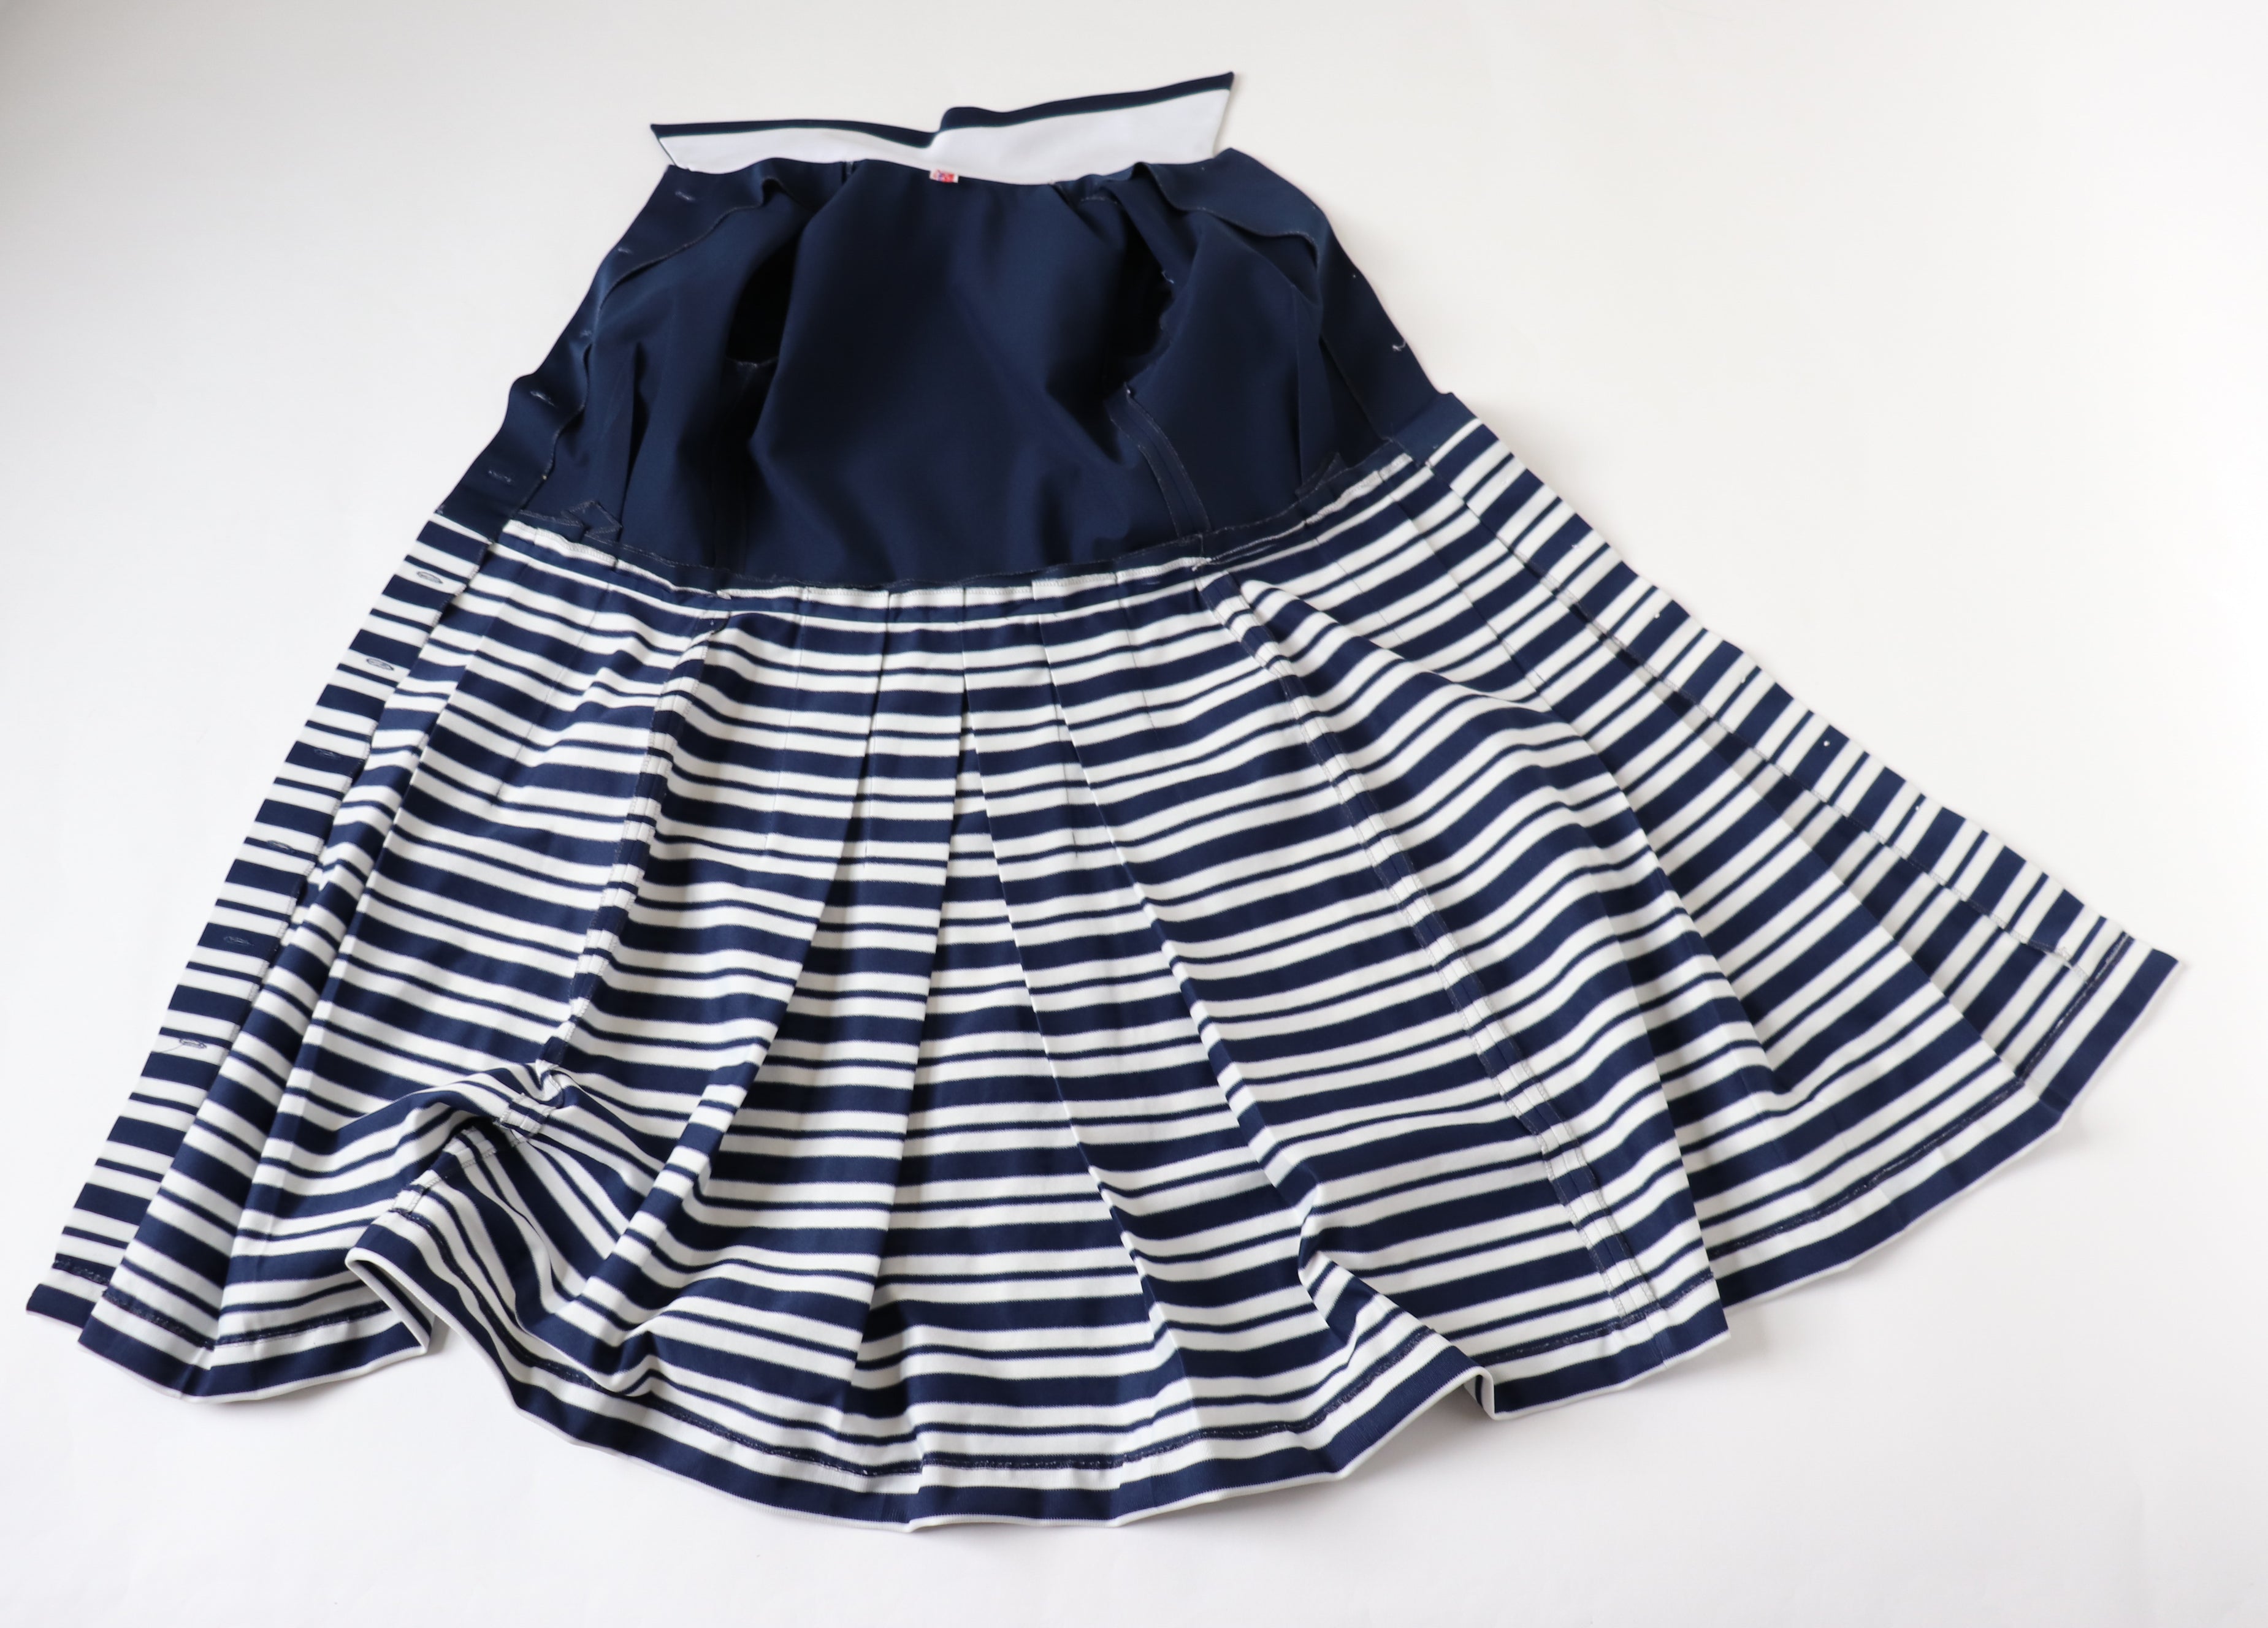 1970s Shirt Waister Vintage Dress - Blue / Striped - UK 10 / 12